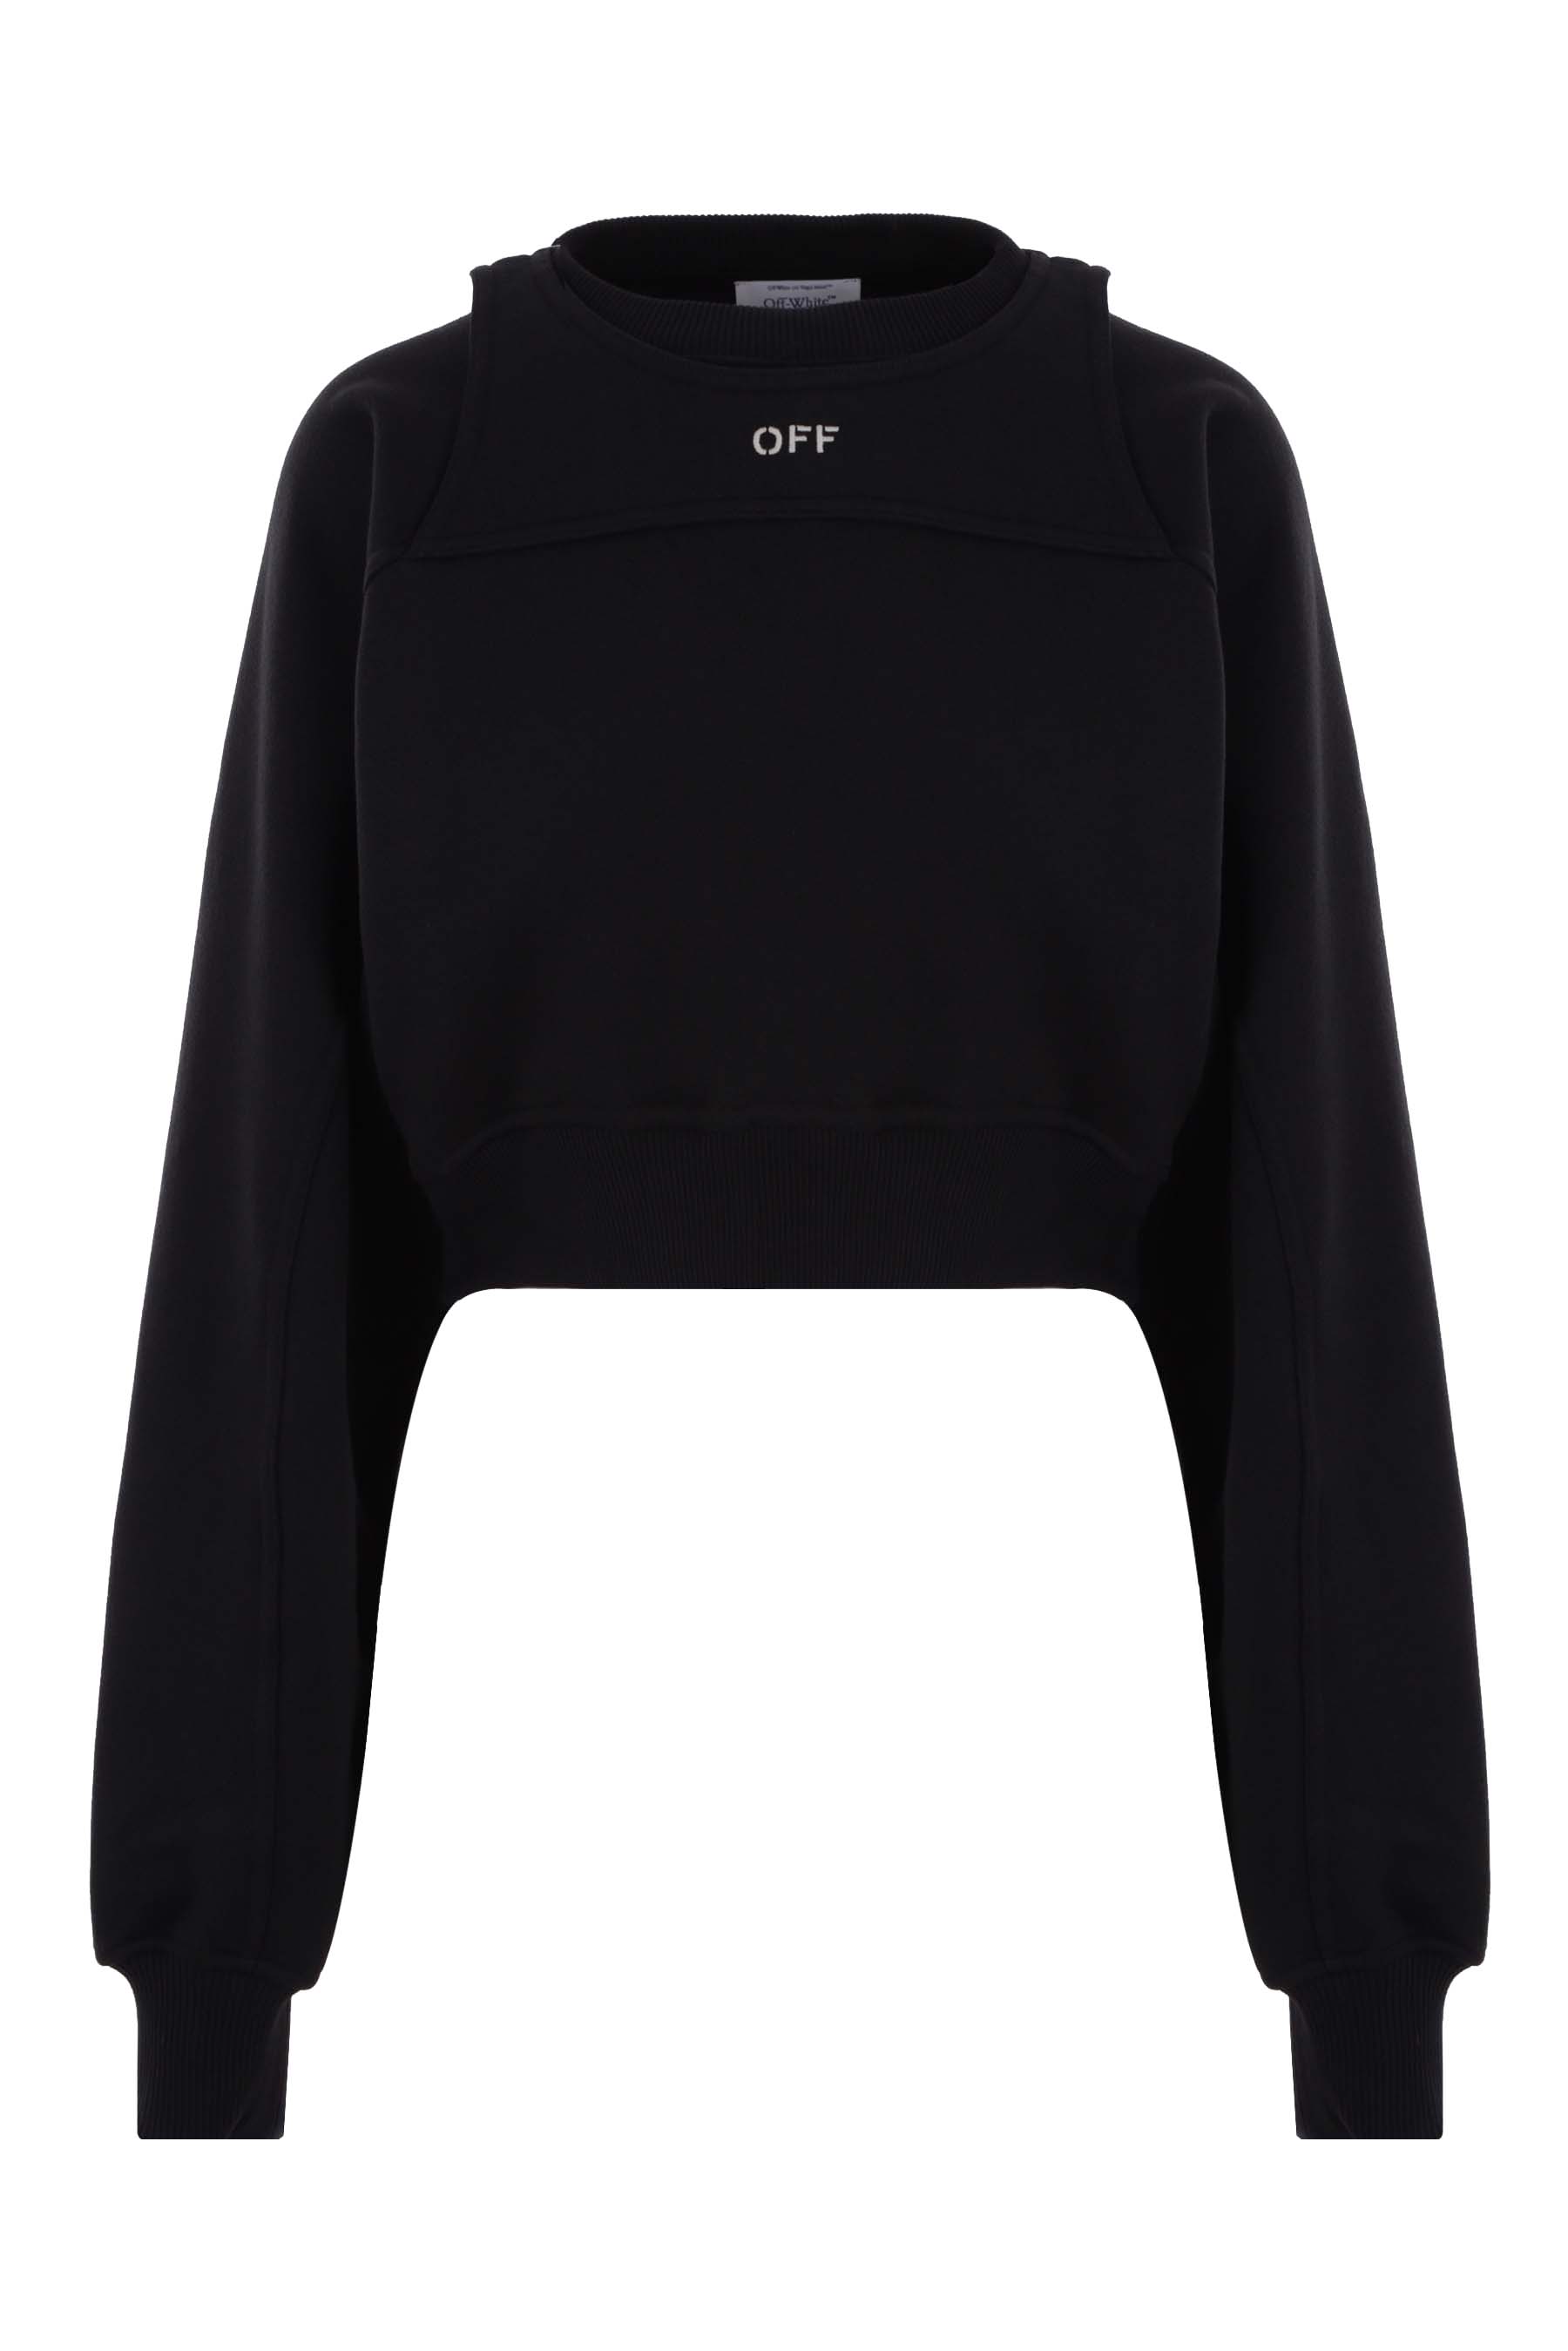 OFF-WHITE Off Jersey Cropped Sweatshirt with Bolero Insert Black